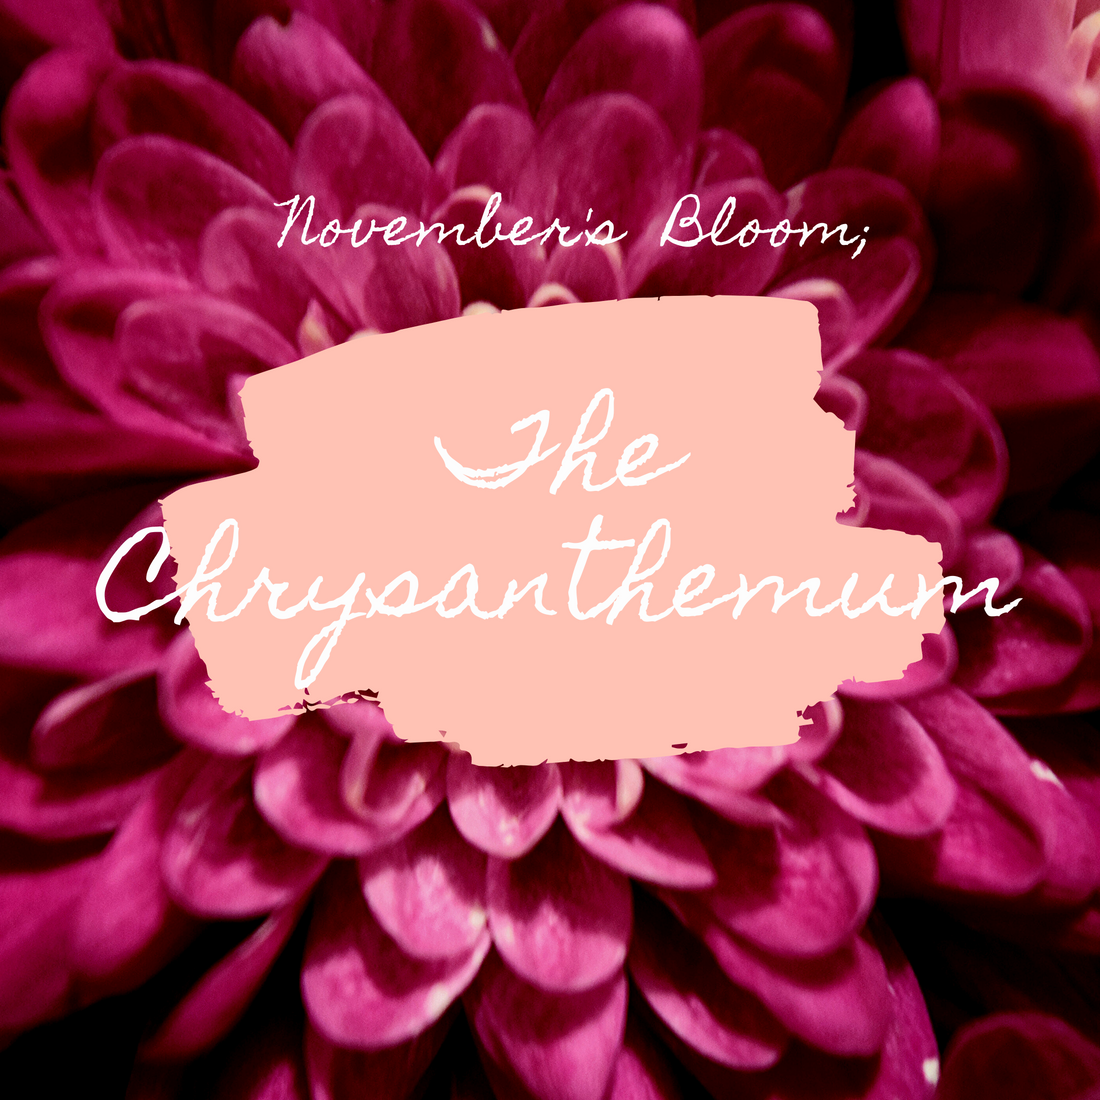 November's Bloom; The Chrysanthemum